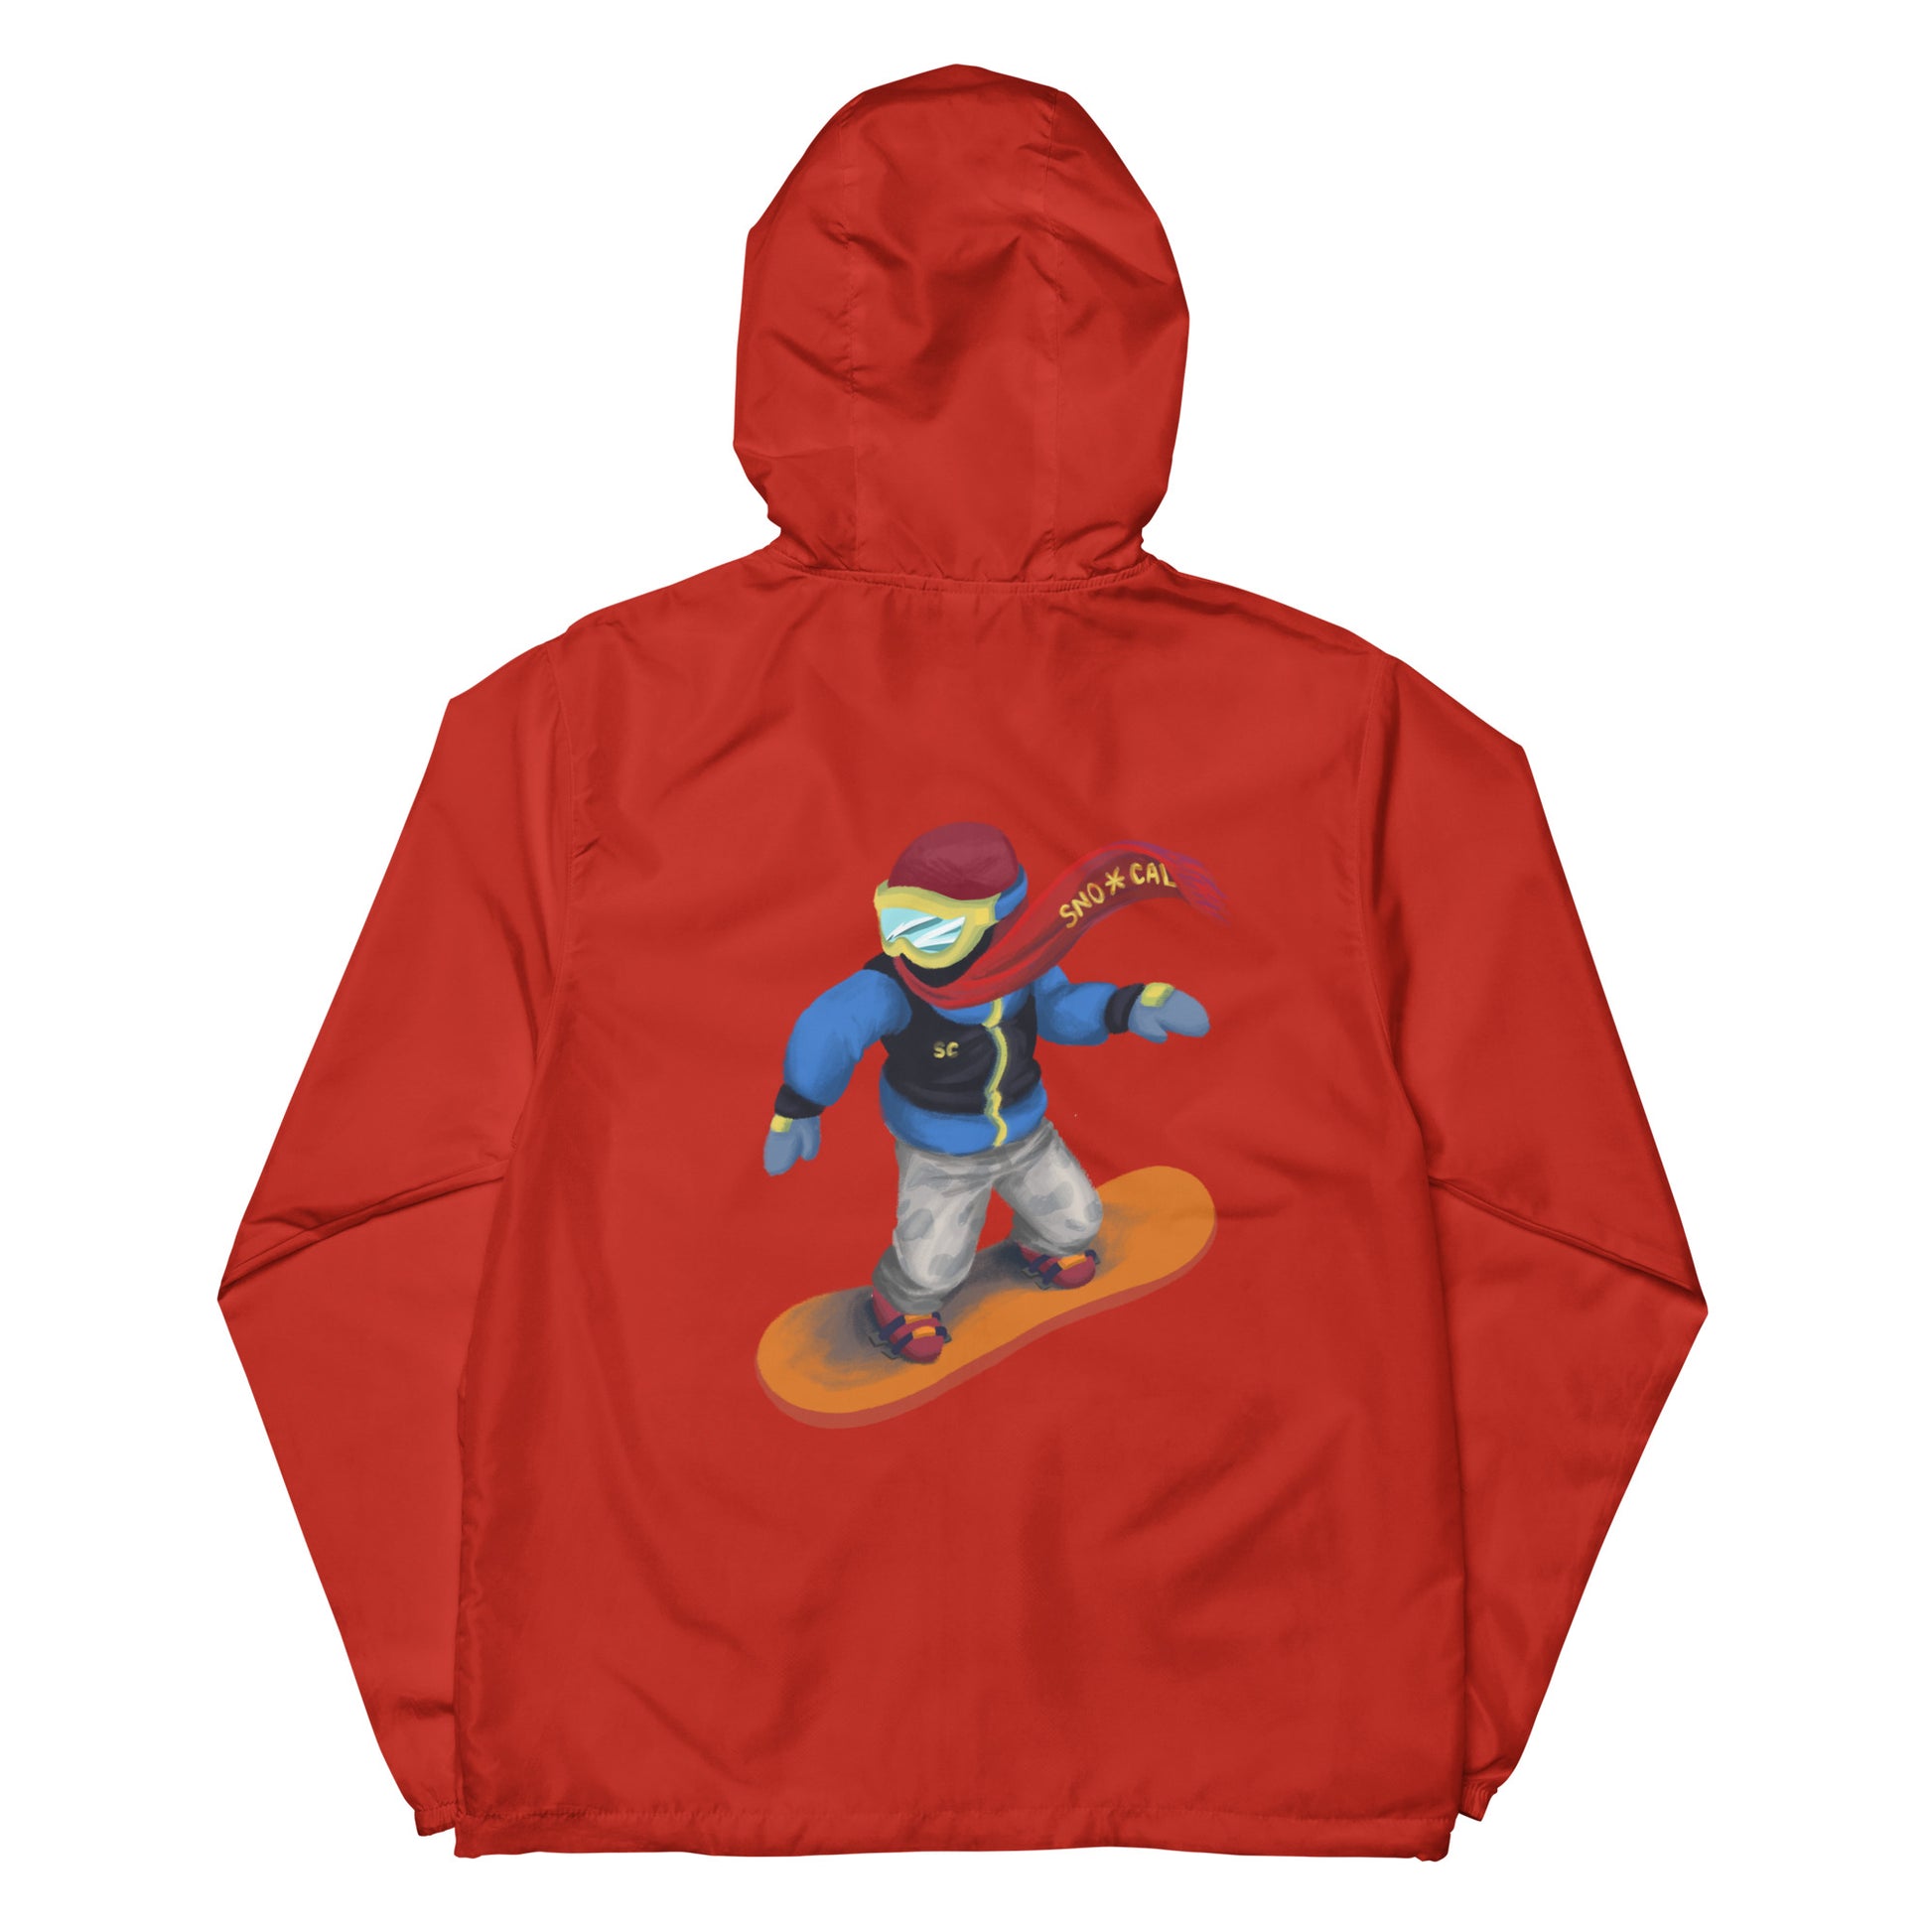 red snowboard emoji hoodie with zipper